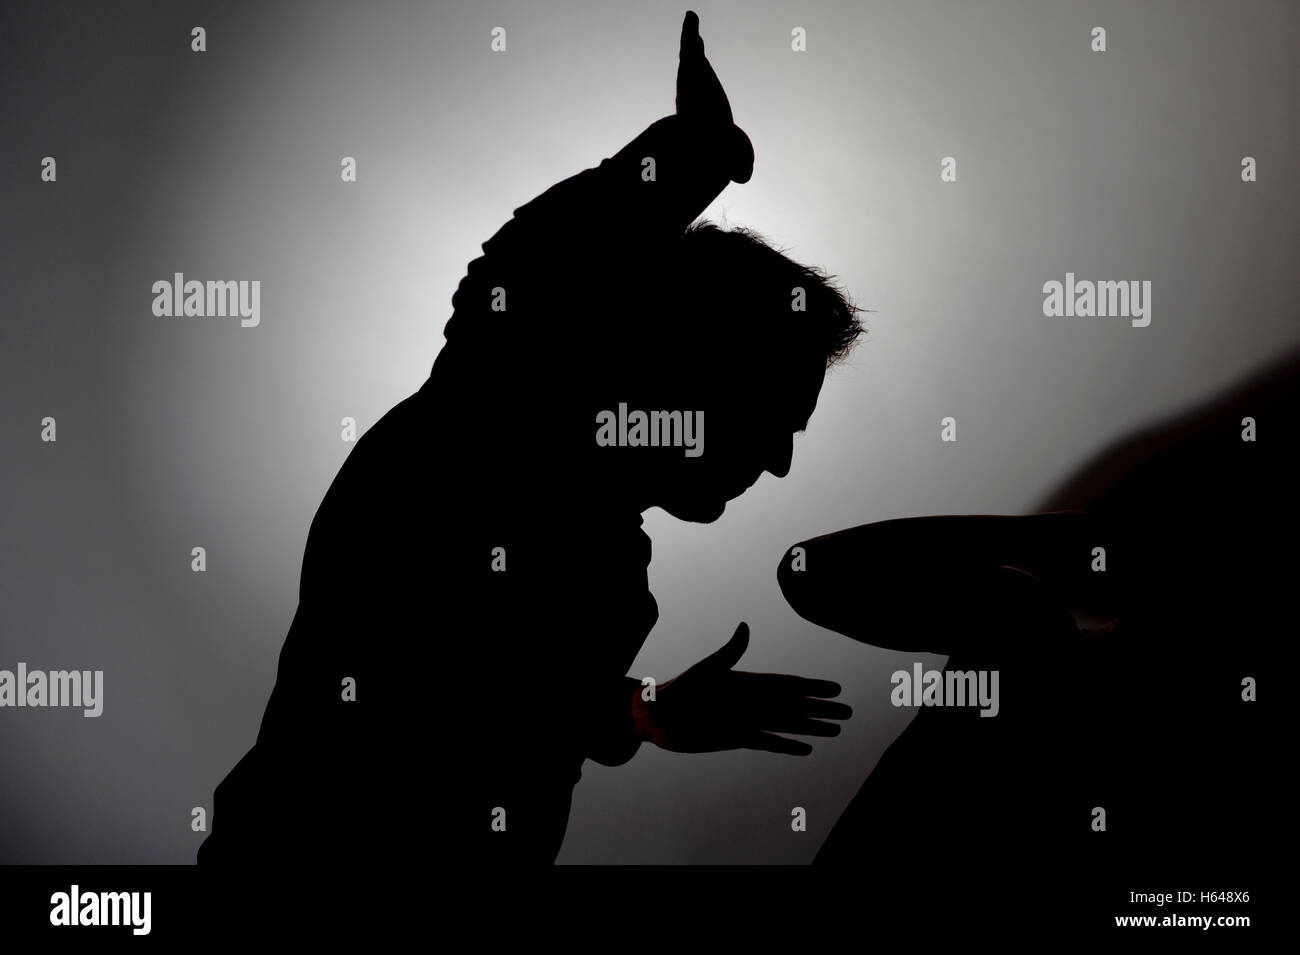 Man beating woman, silhouette Stock Photo